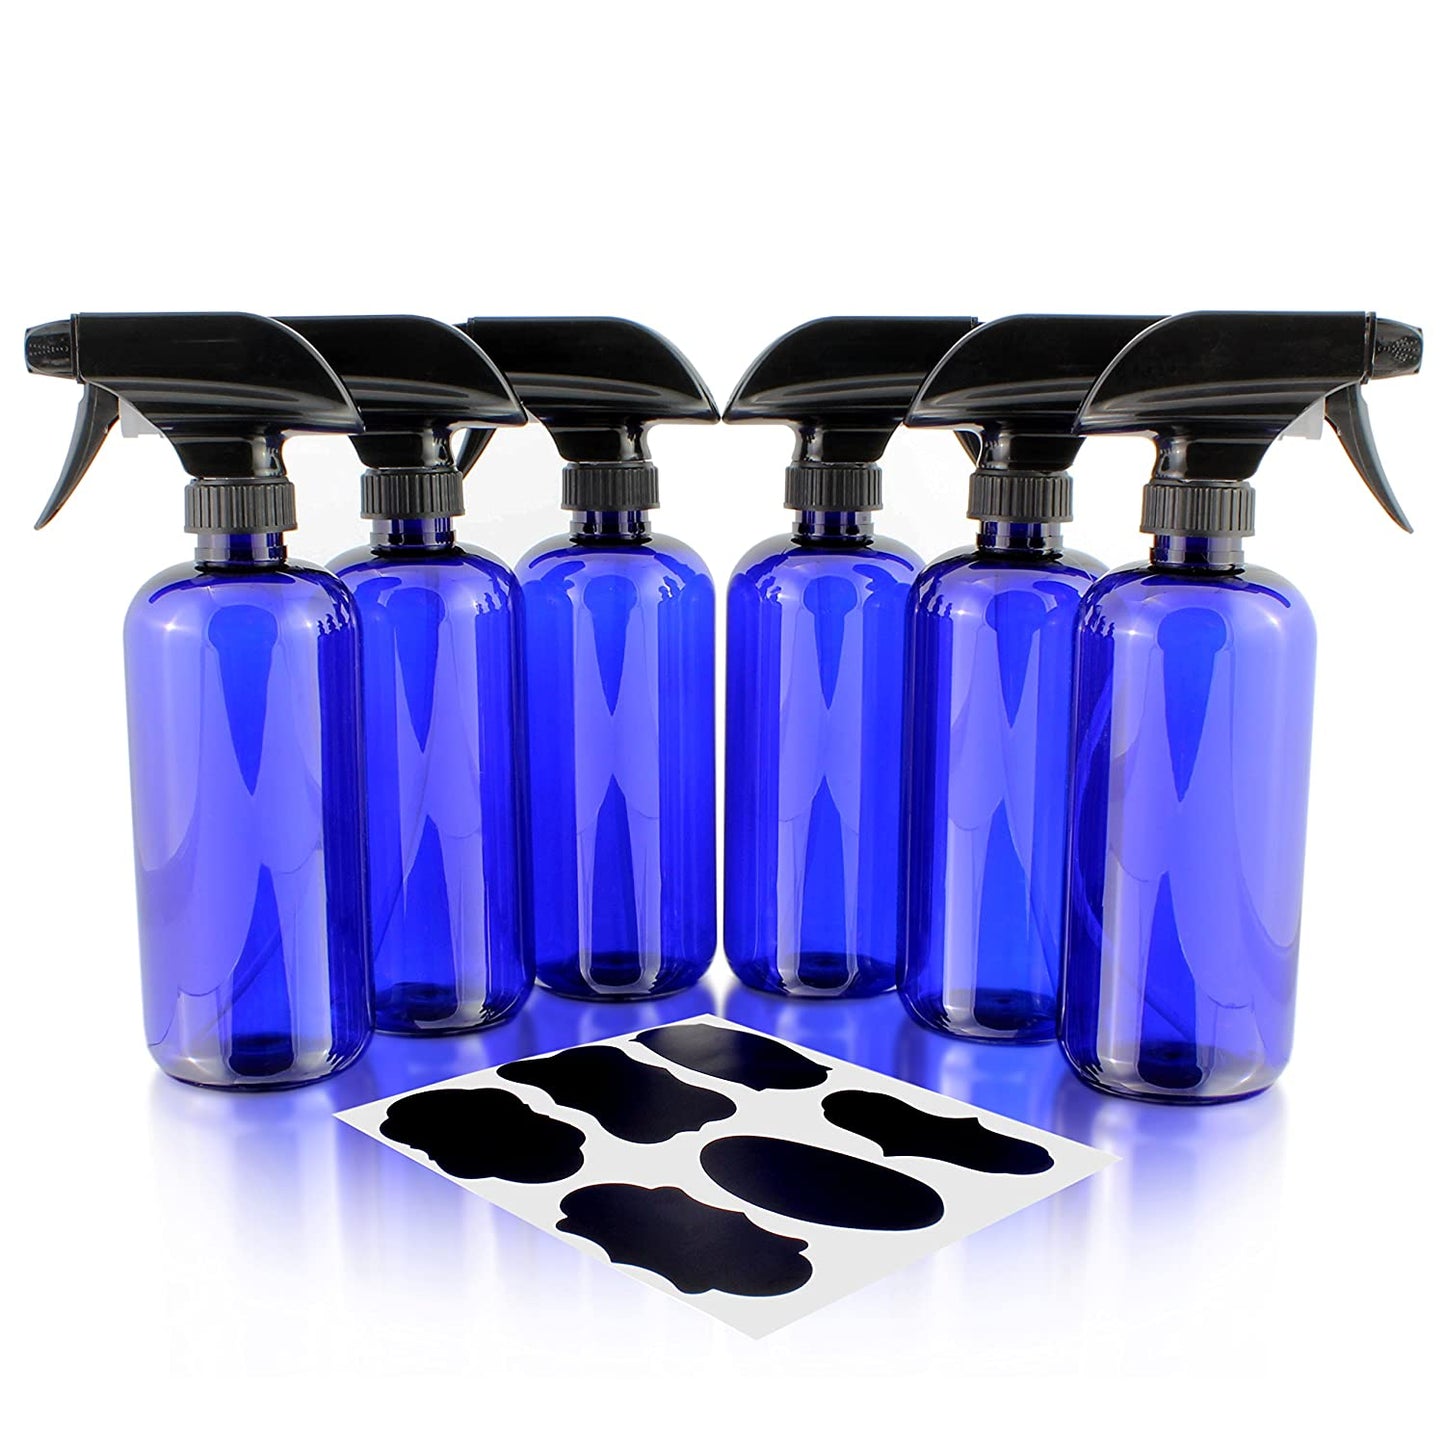 Plastic Spray Bottles with Mist & Stream Sprayers (6-Pack)